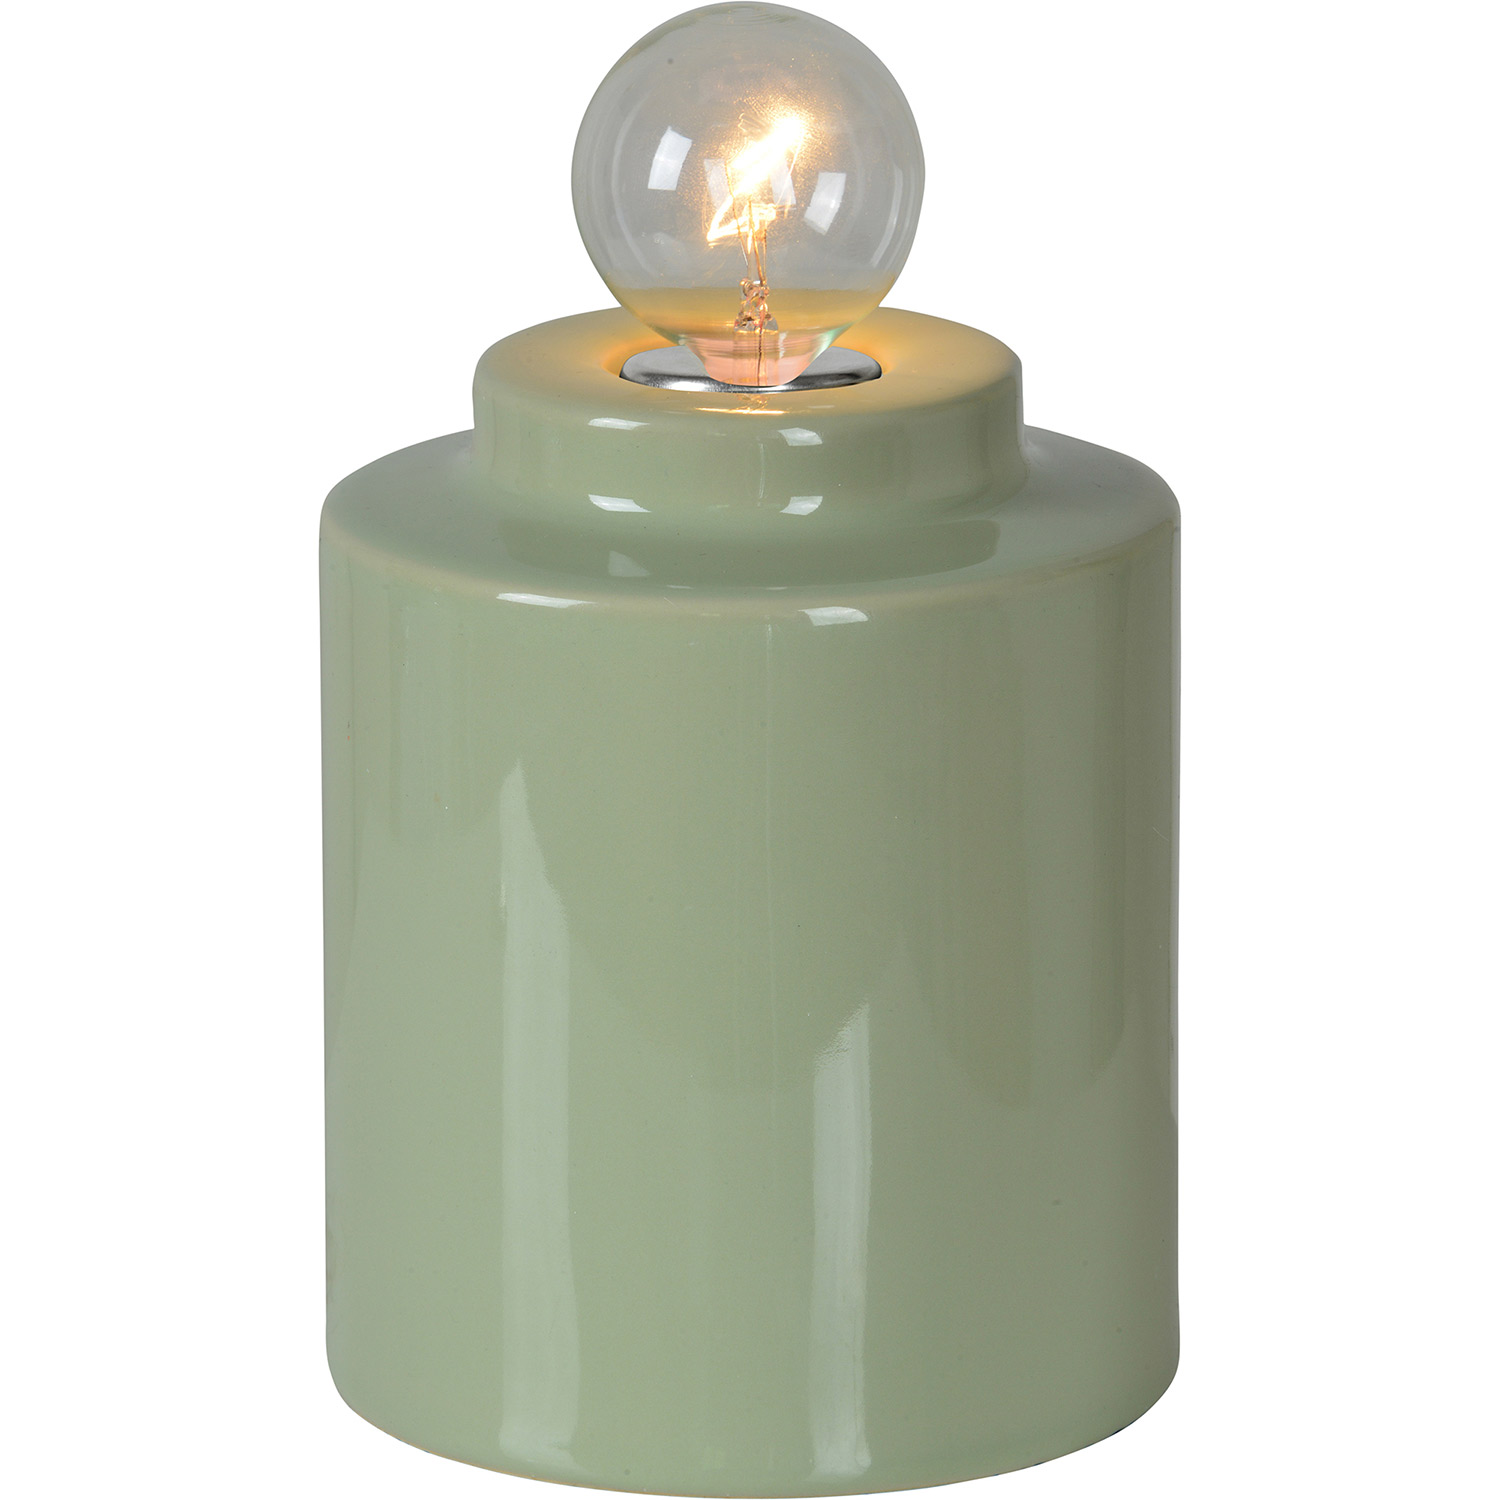 Ren-Wil Cedra Table Lamp - Moss Green